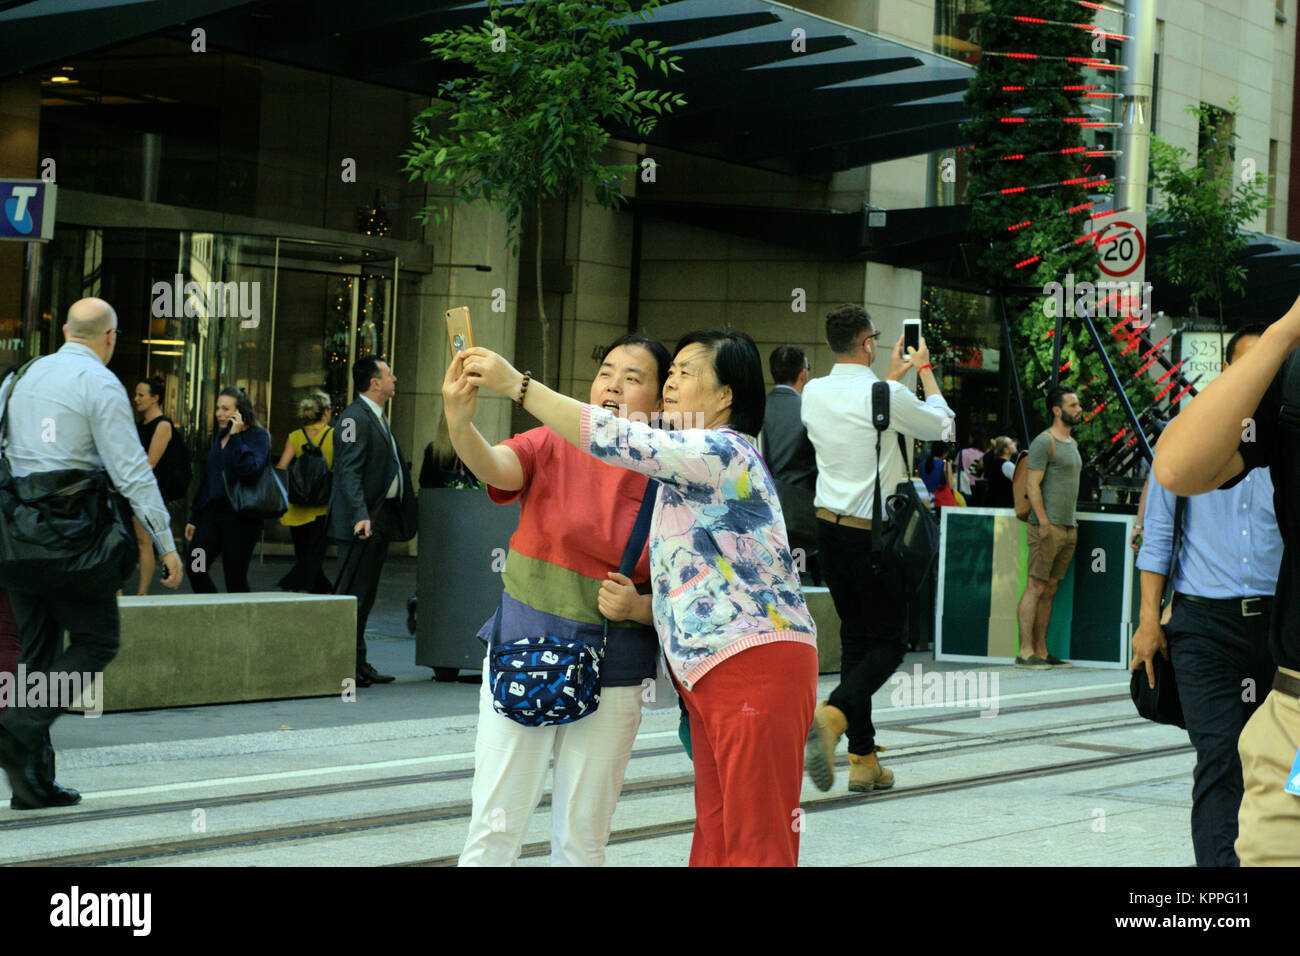 Two Asian women taking selfie at George St in Sydney Australia. Asian tourists in Australia. Outdoors Sydney Australia Daytime Image Stock Photo